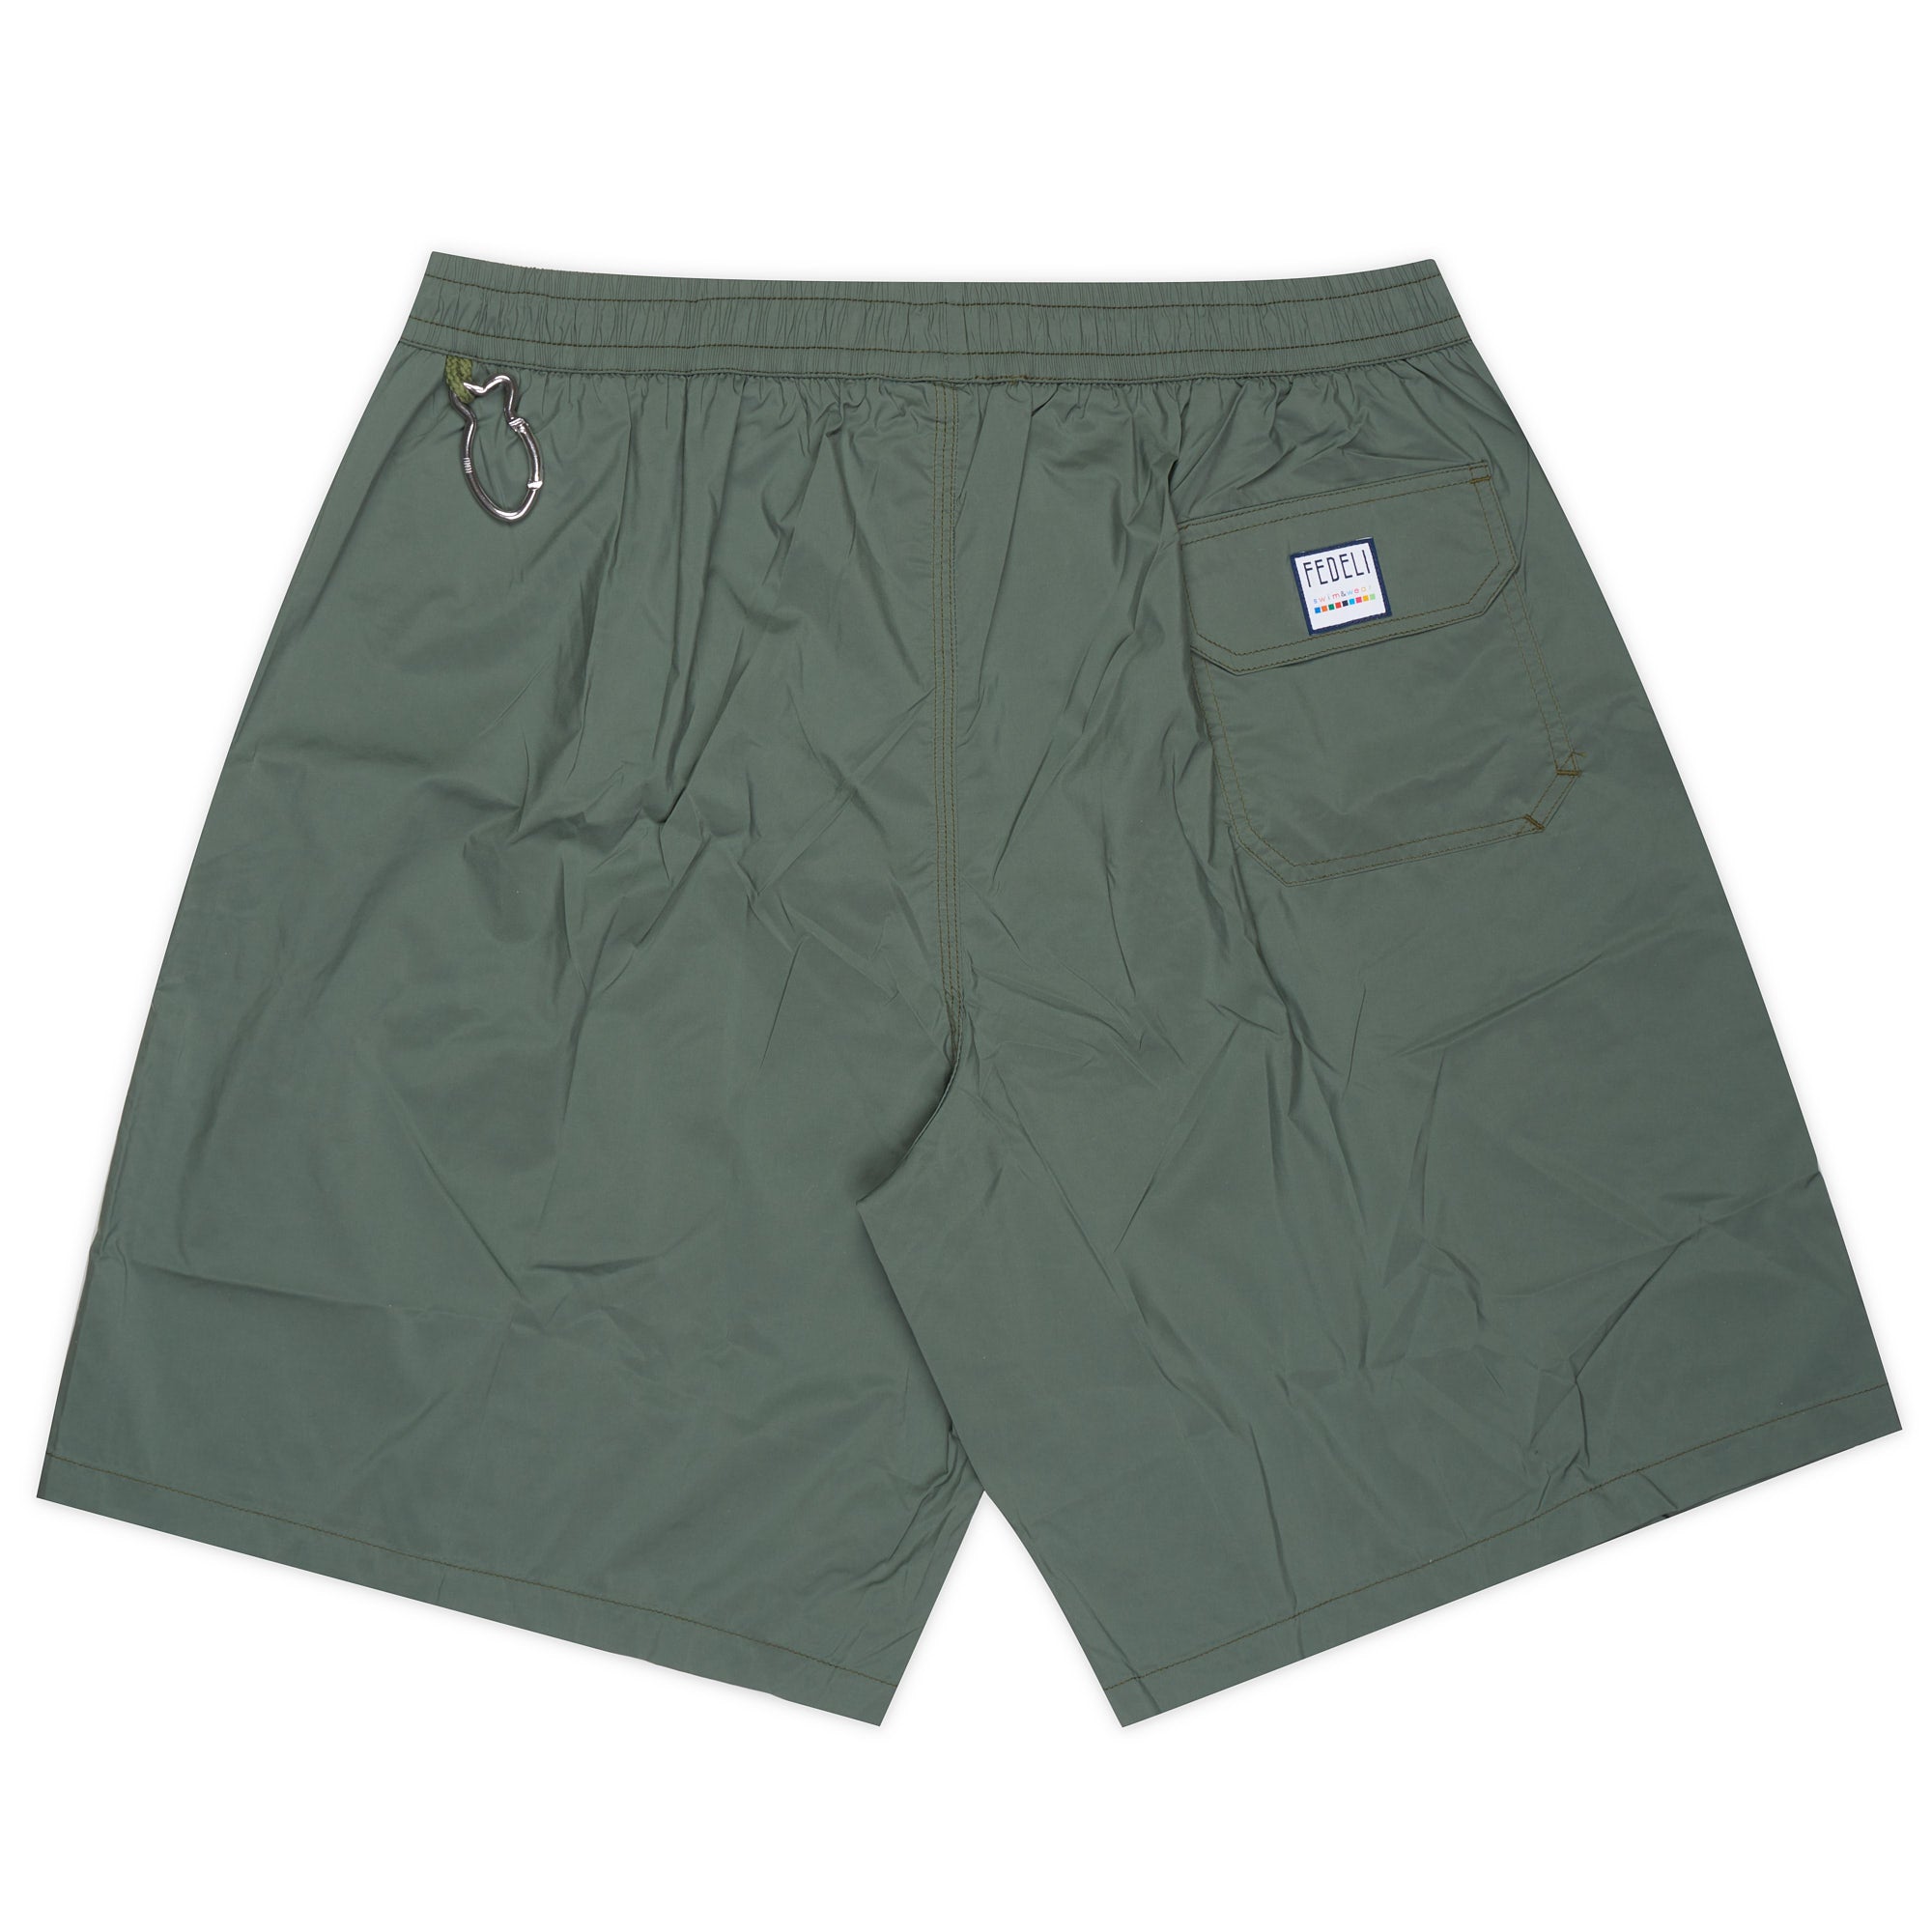 FEDELI Green Positano Airstop Swim Shorts Trunks NEW Size 3XL FEDELI